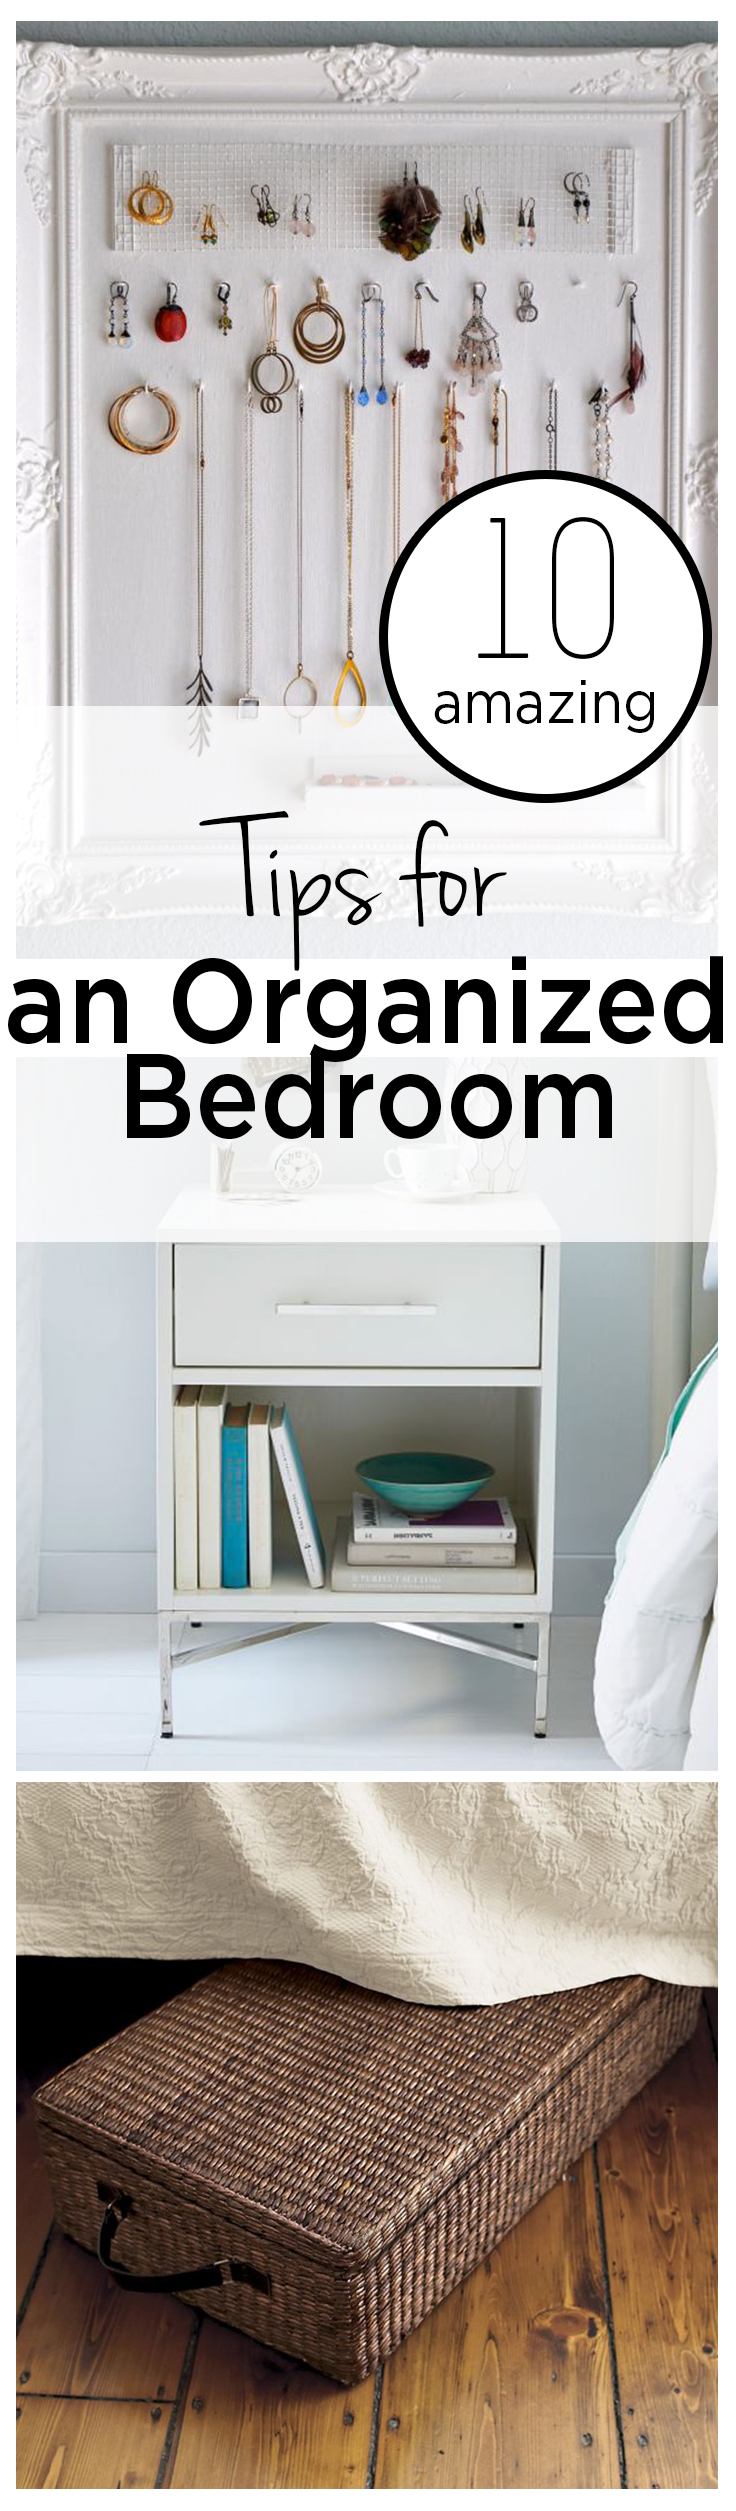 Organized bedroom, bedroom hacks, popular pin, DIY organization, home organization, home, DIY home, easy organization, storage ideas.